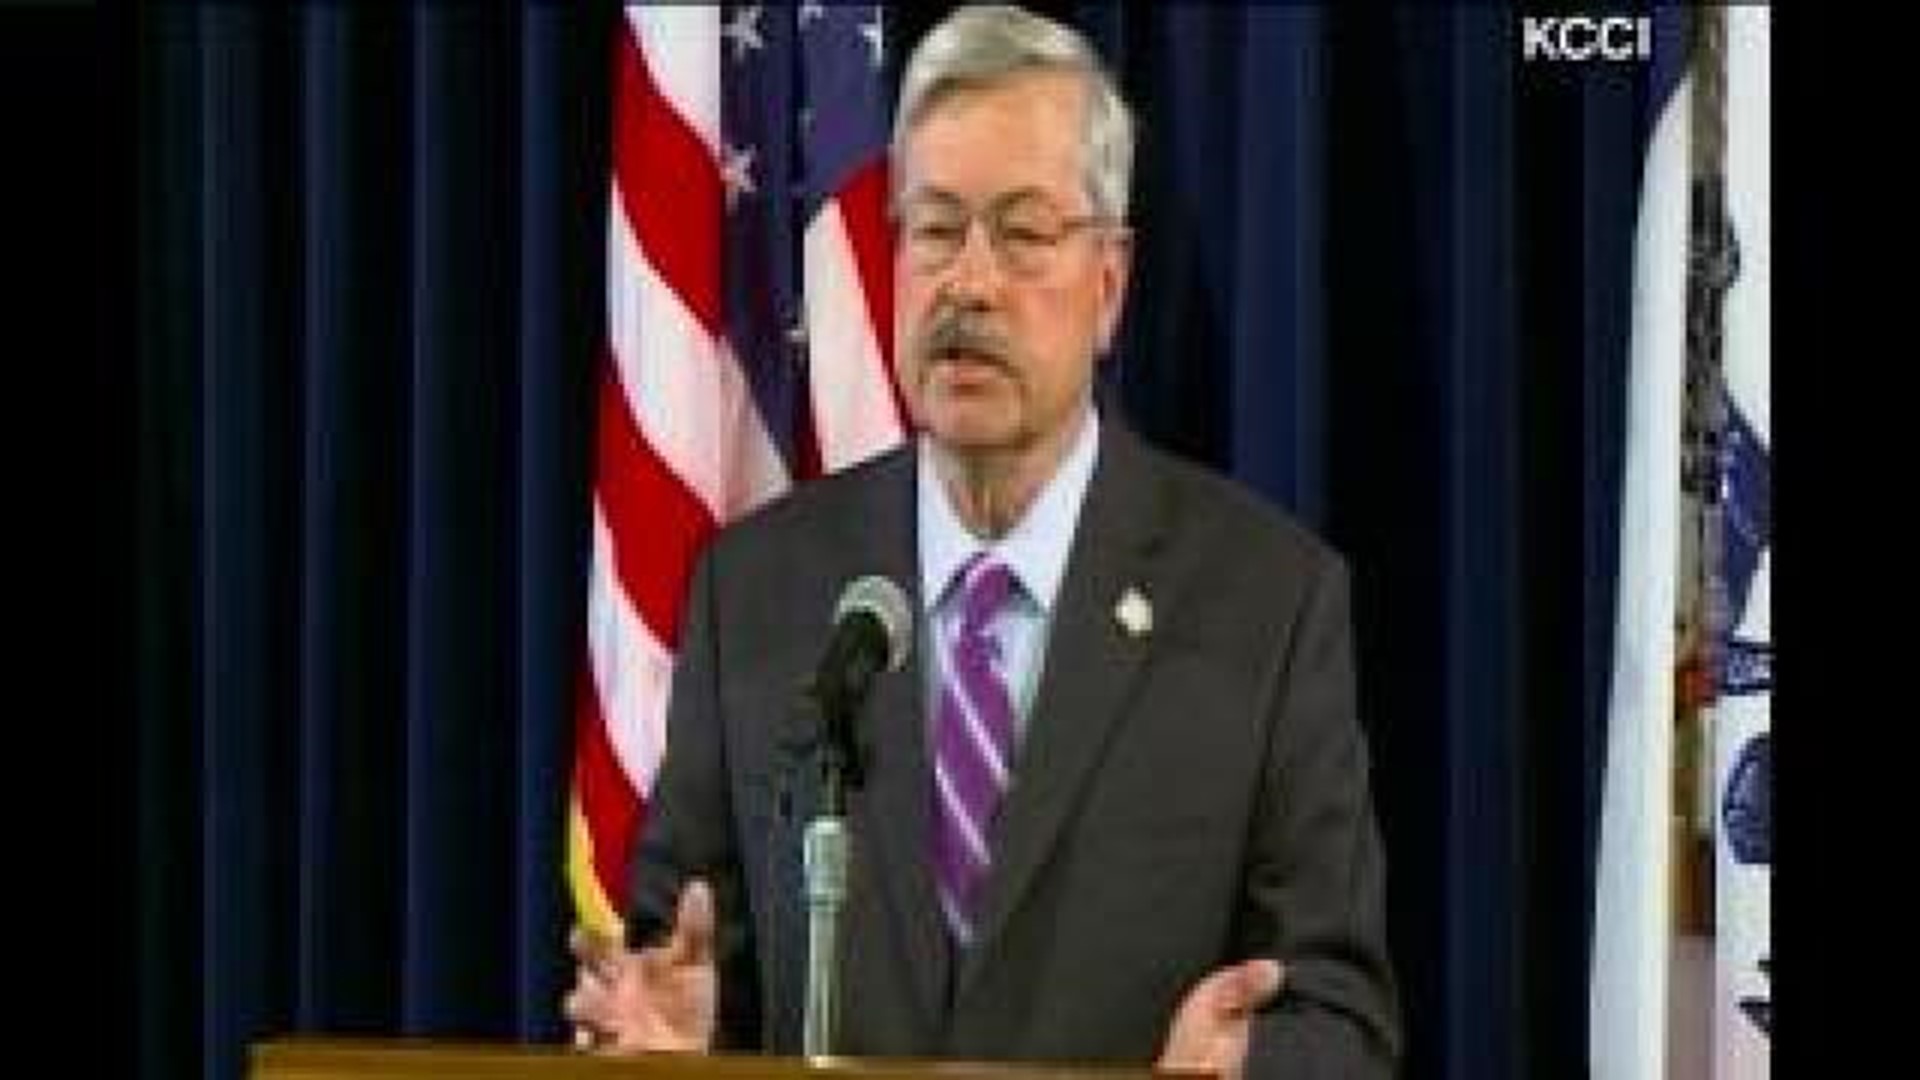 Governor Branstad discusses termination of Larry Hedlund